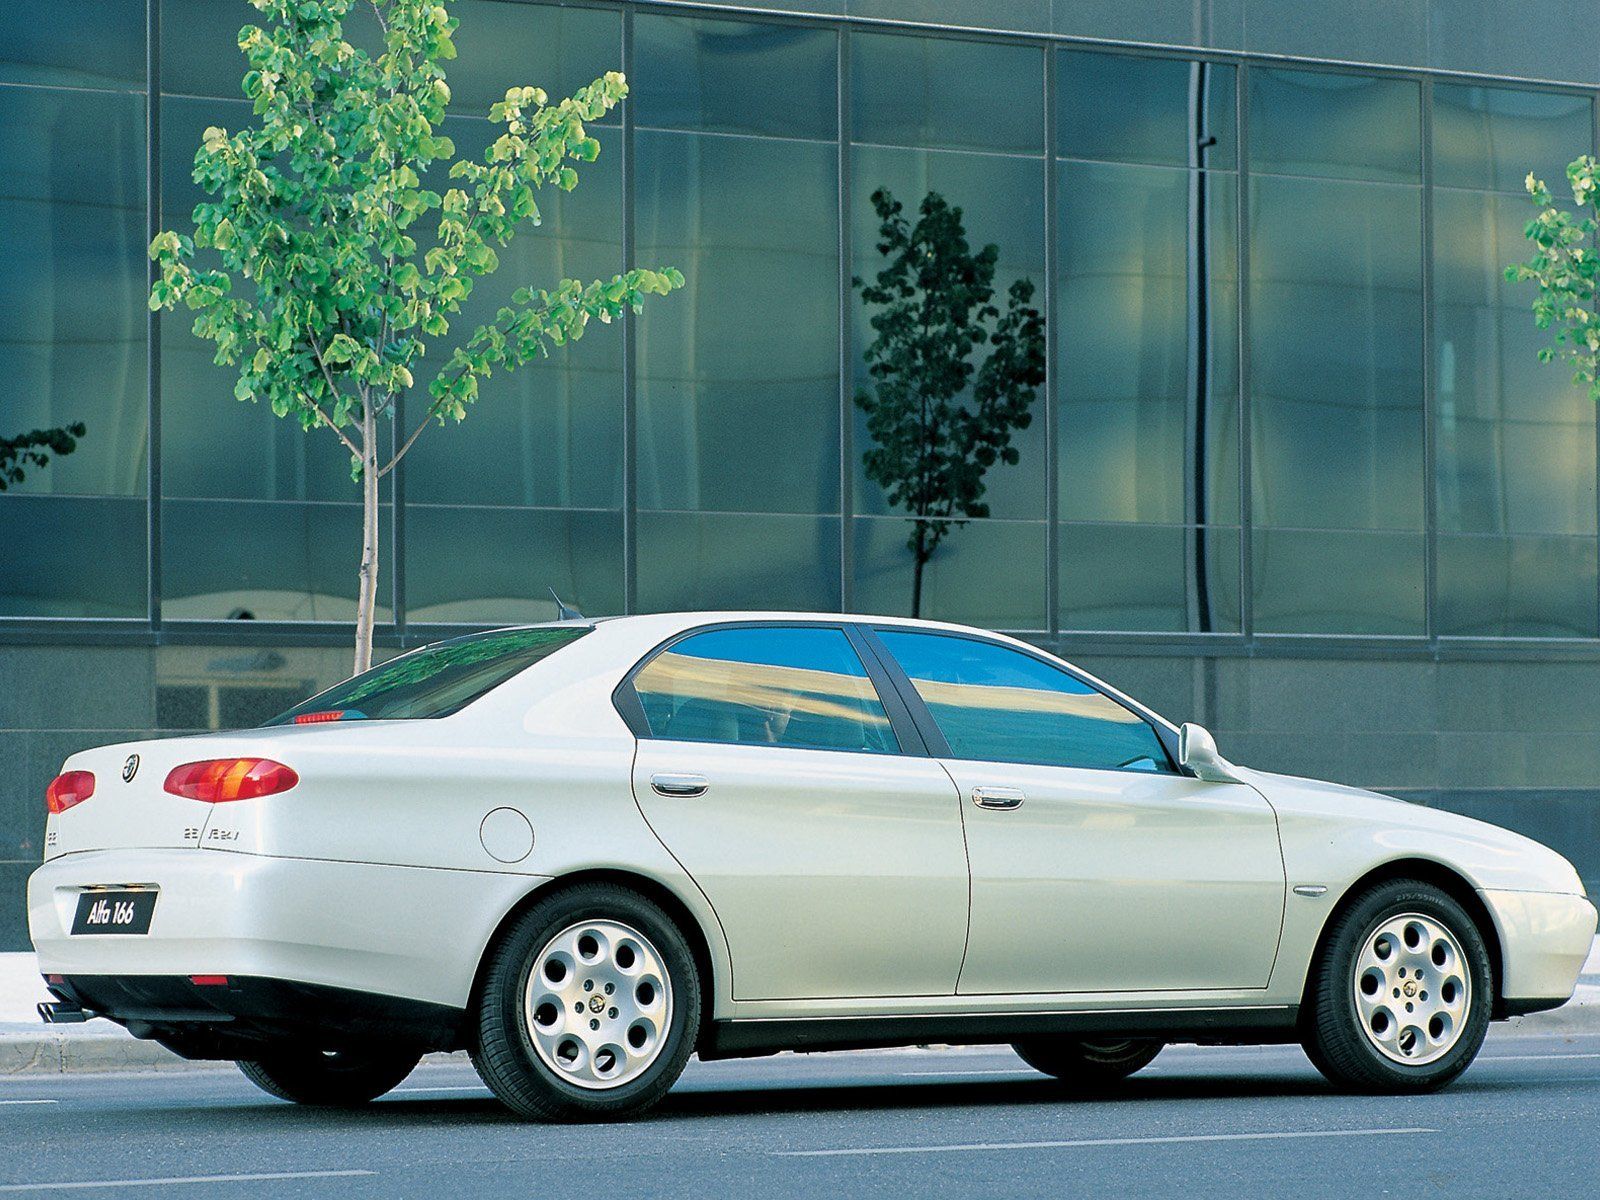 2004 - 2006 Alpha-Romeo 166